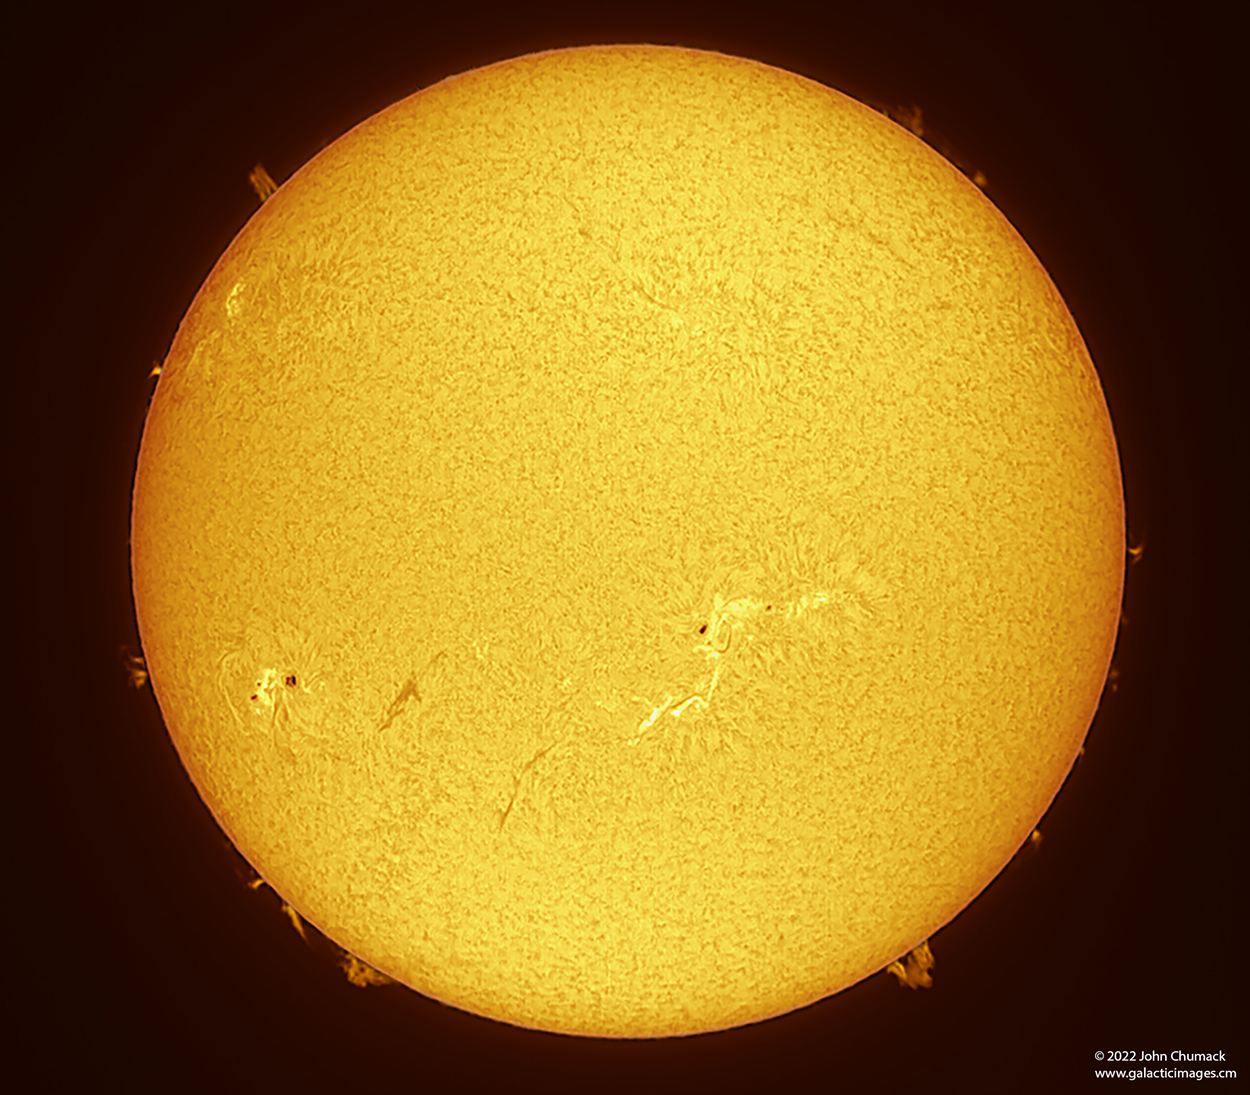 Full Active Sun in Hydrogen Alpha Light on 03-05-2022